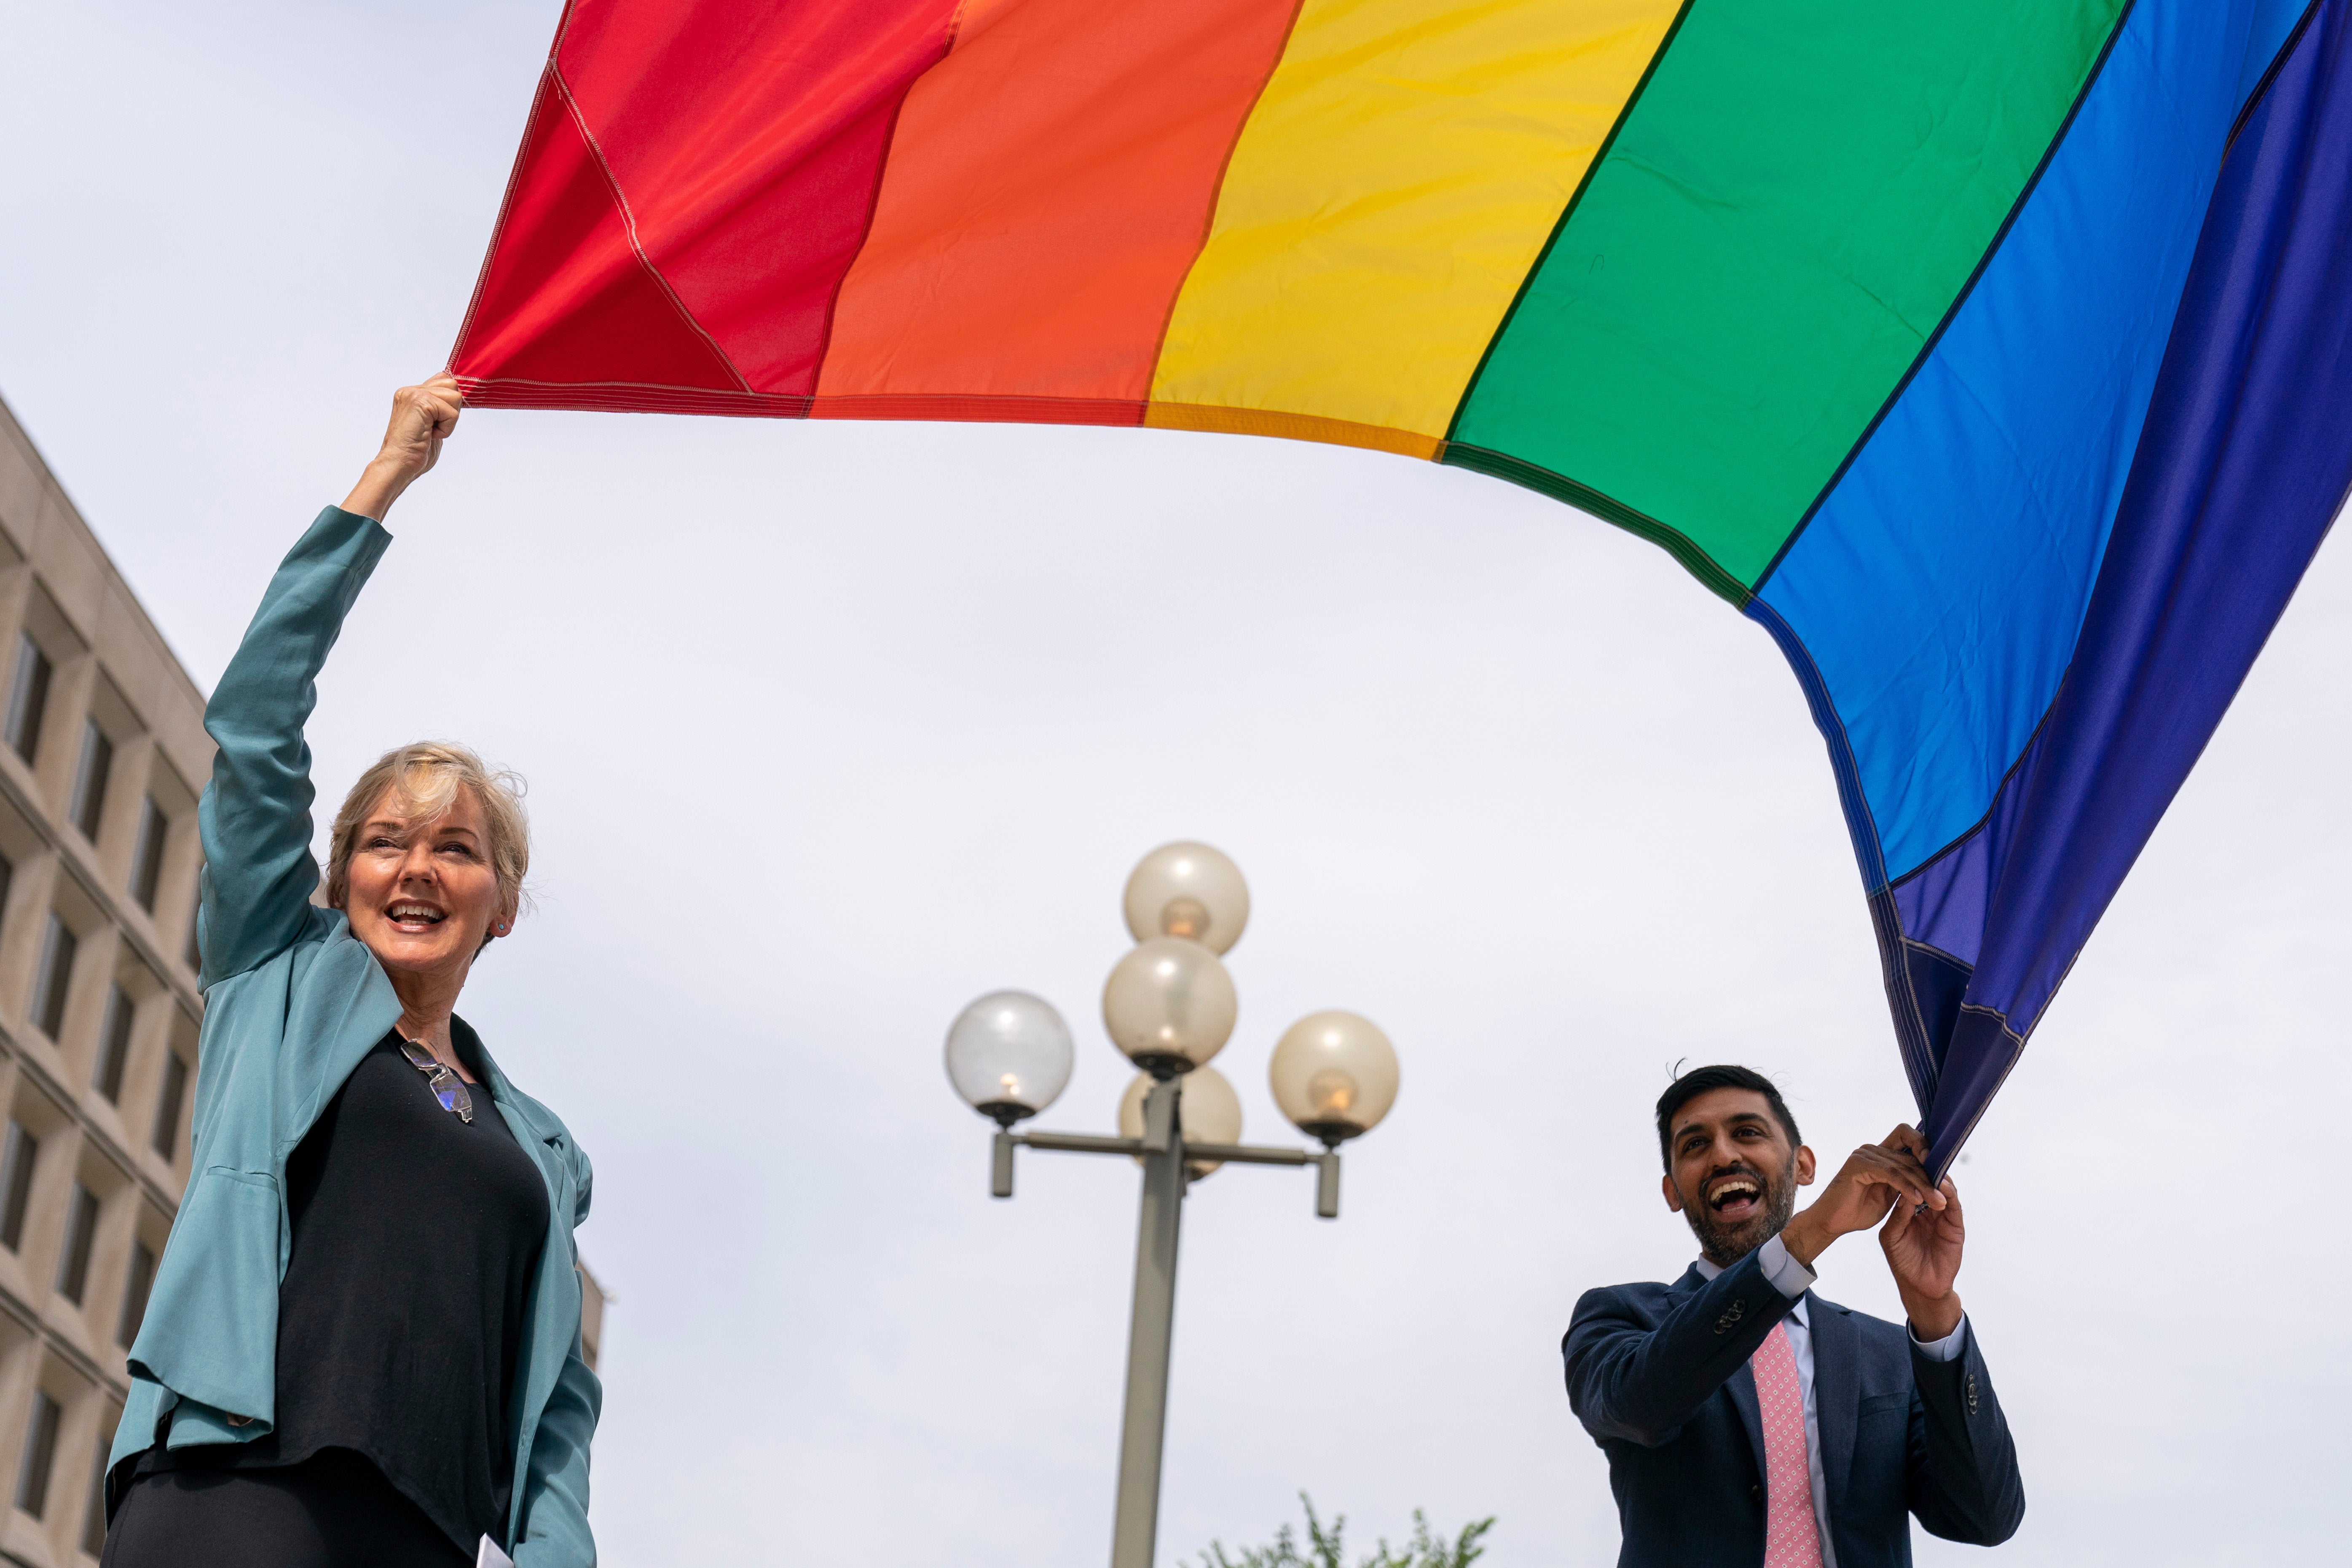 Energy secretary Jennifer Granholm and Department of Energy chief of staff Tarak Shah raise the Pride flag in Washington on Wednesday